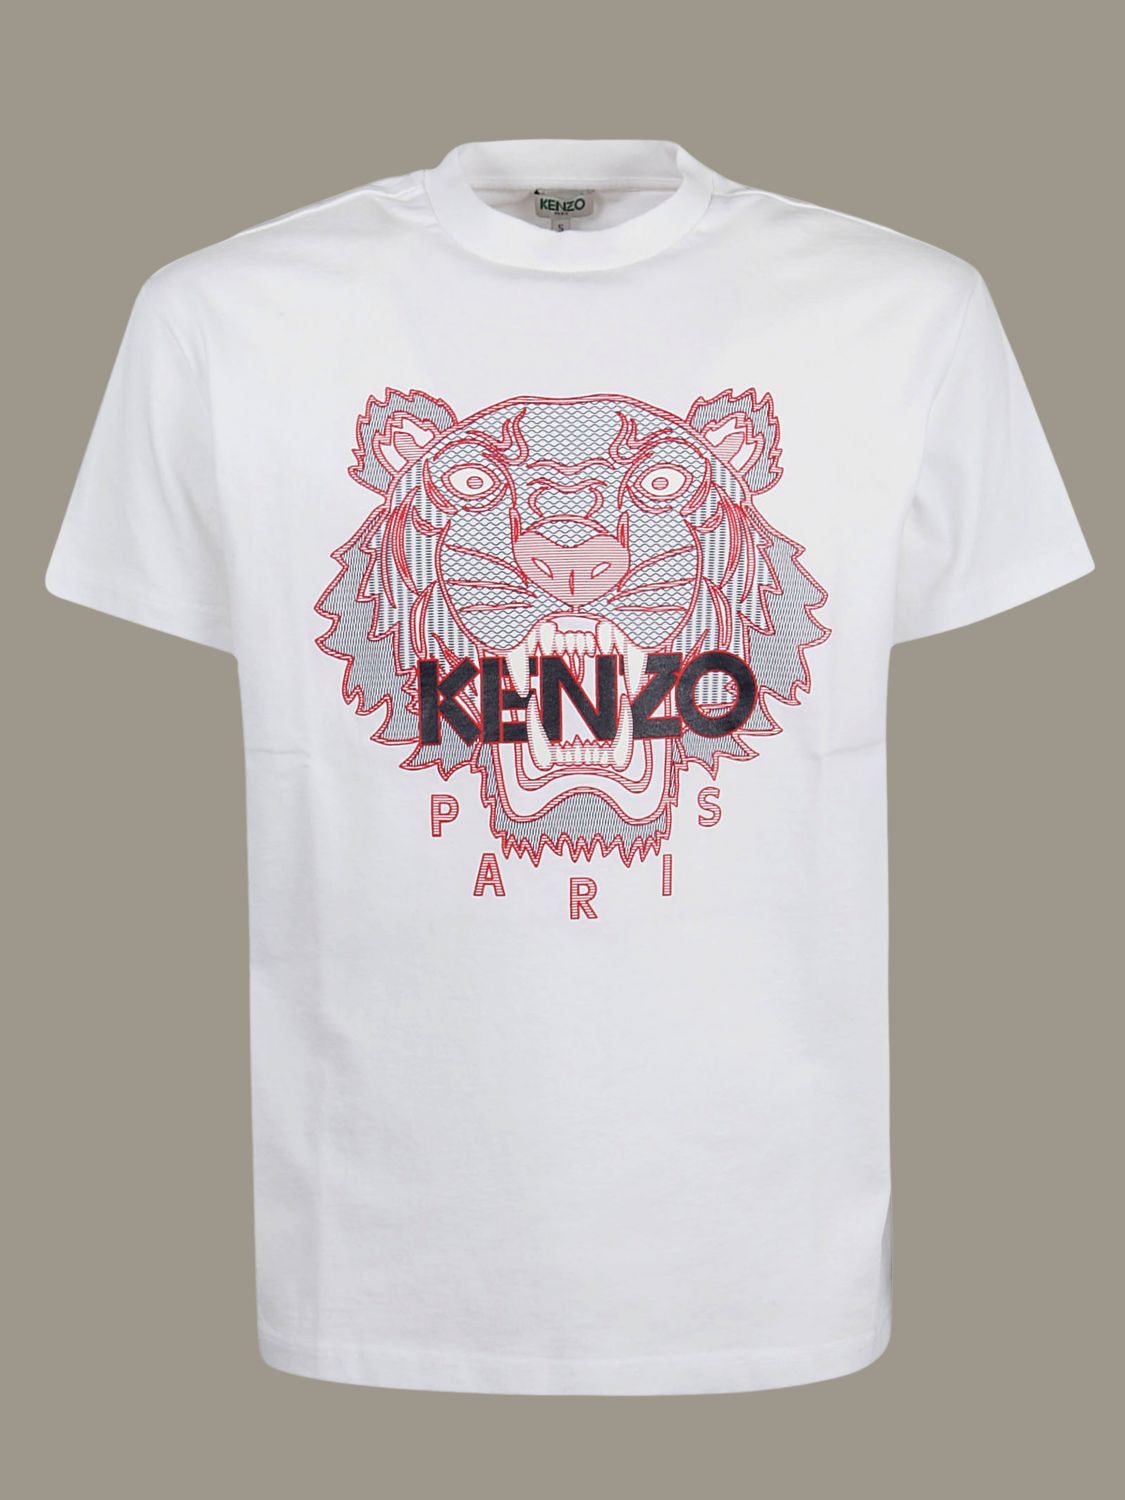 kenzo homme shirt